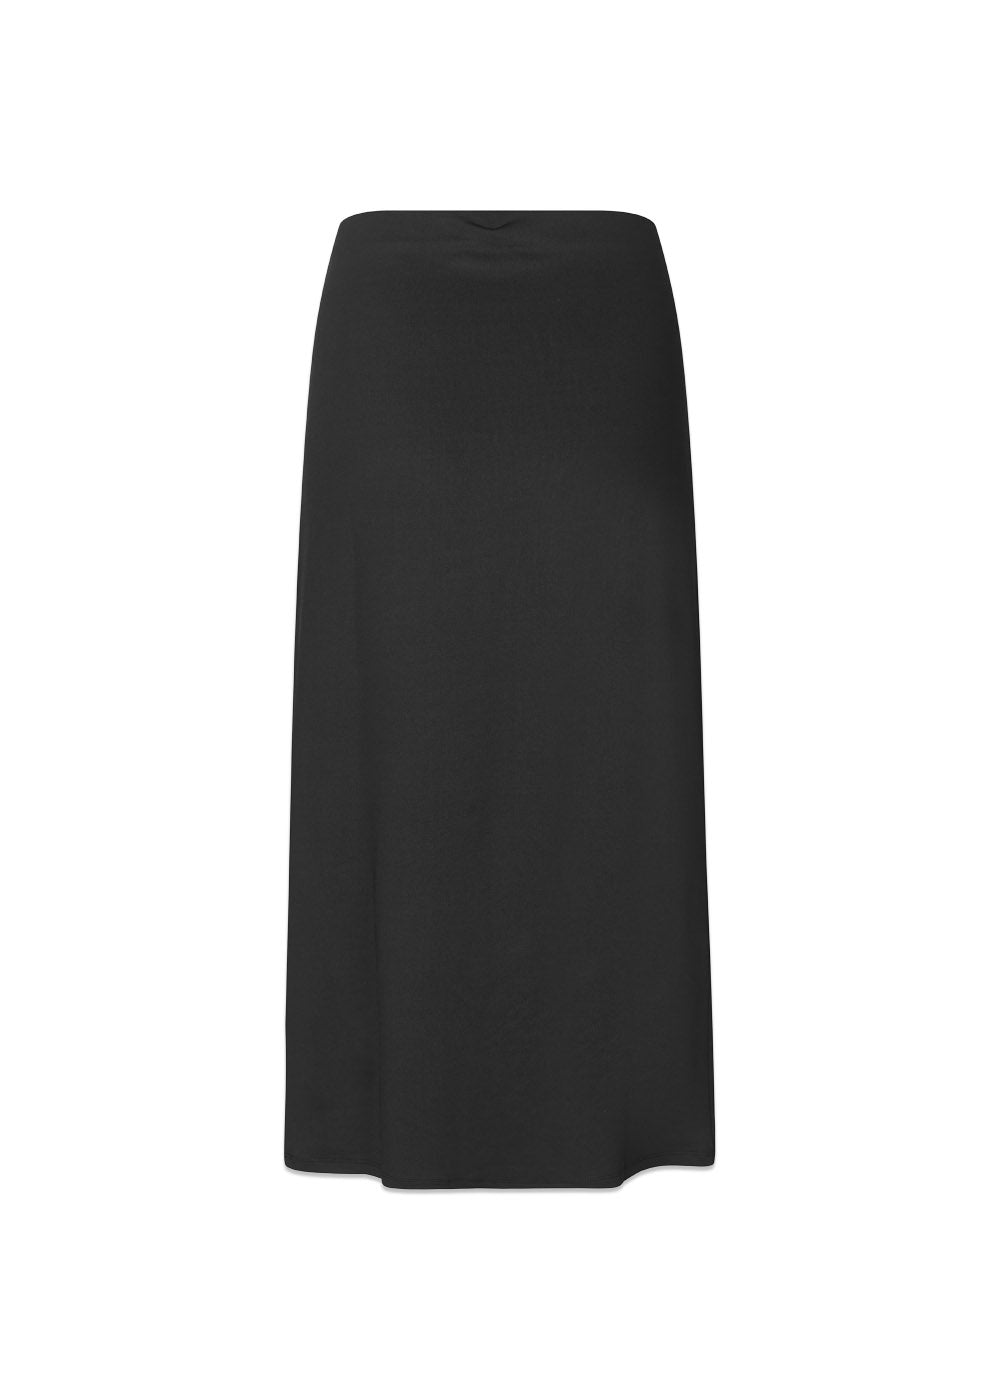 ImaMD skirt - Black